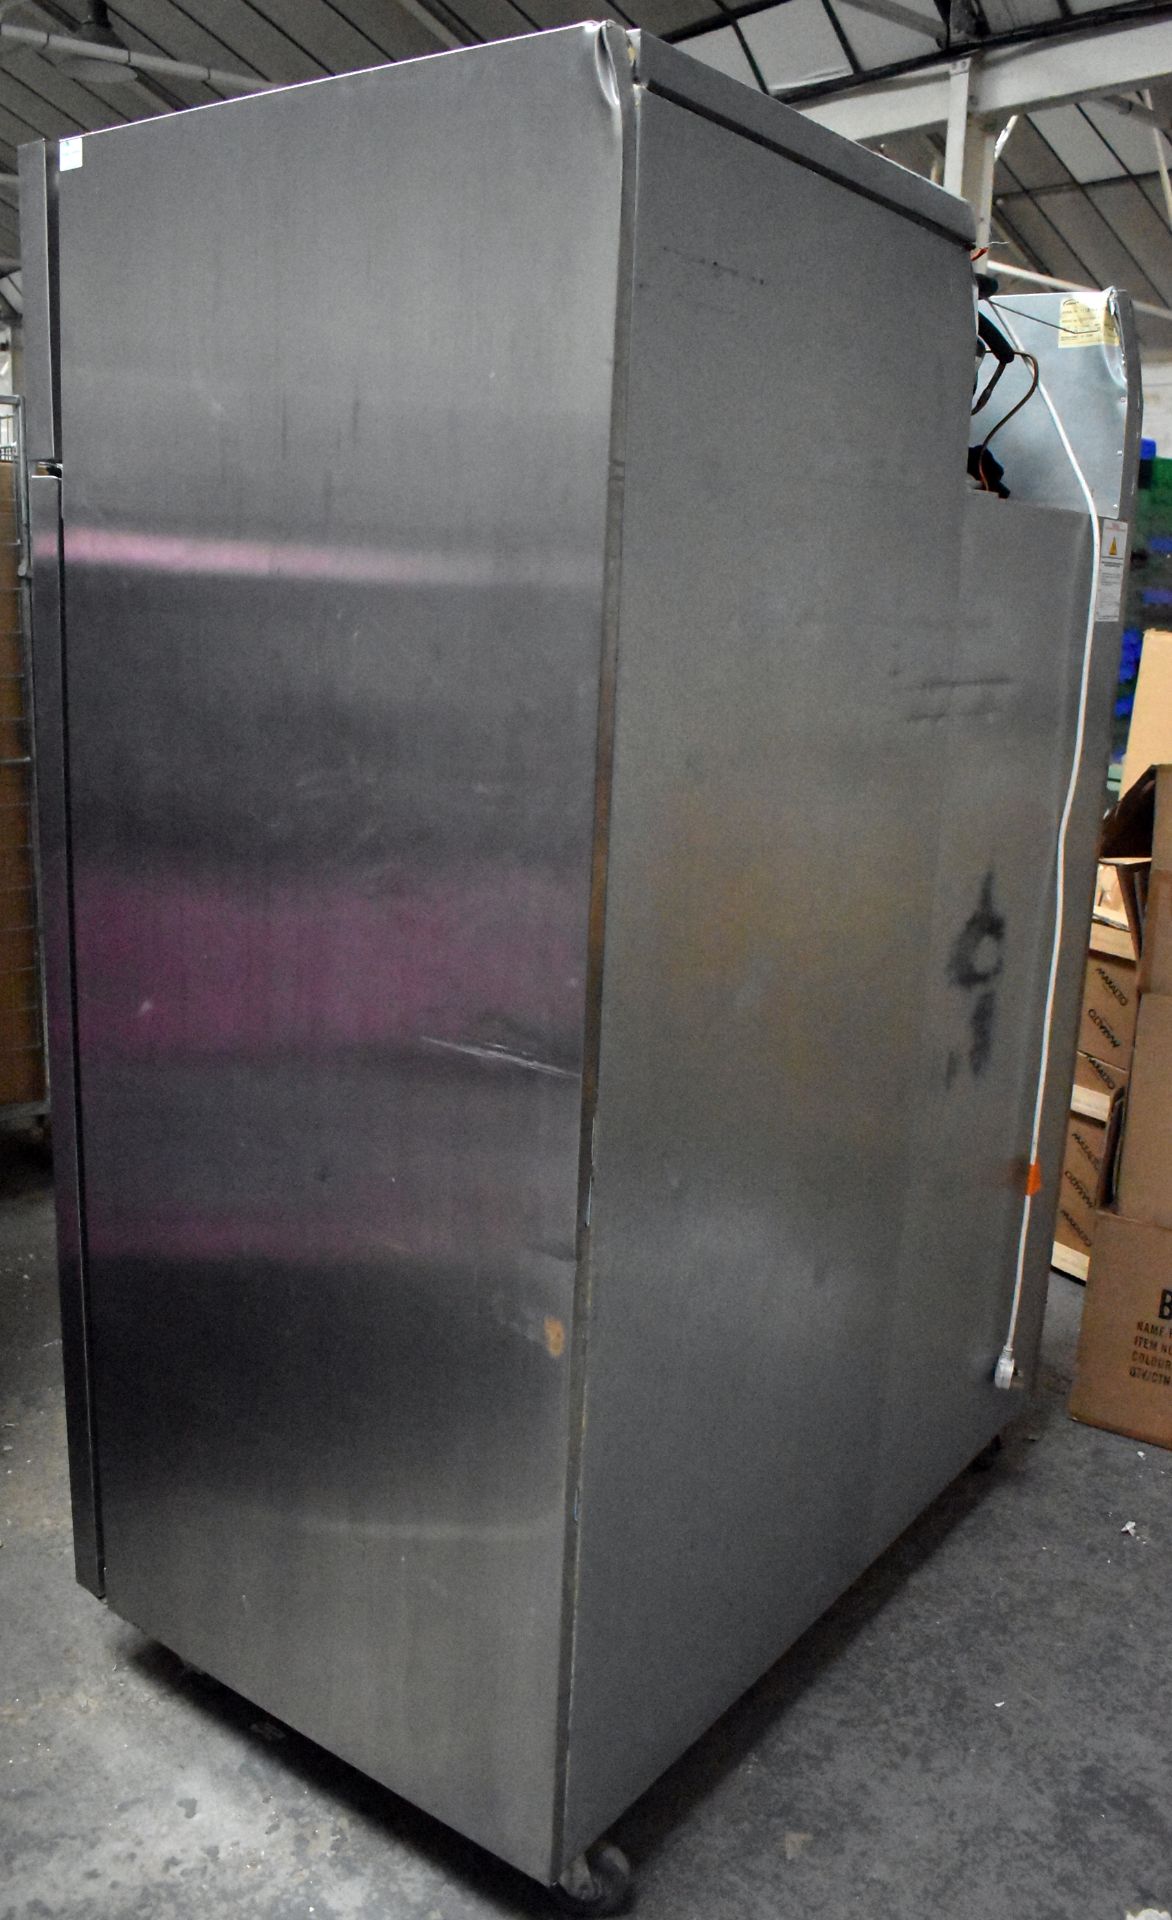 1 x Williams Jade Double Door Upright Refrigerator - 1295Ltr Capacity - Model MJ2-SA - Image 4 of 14